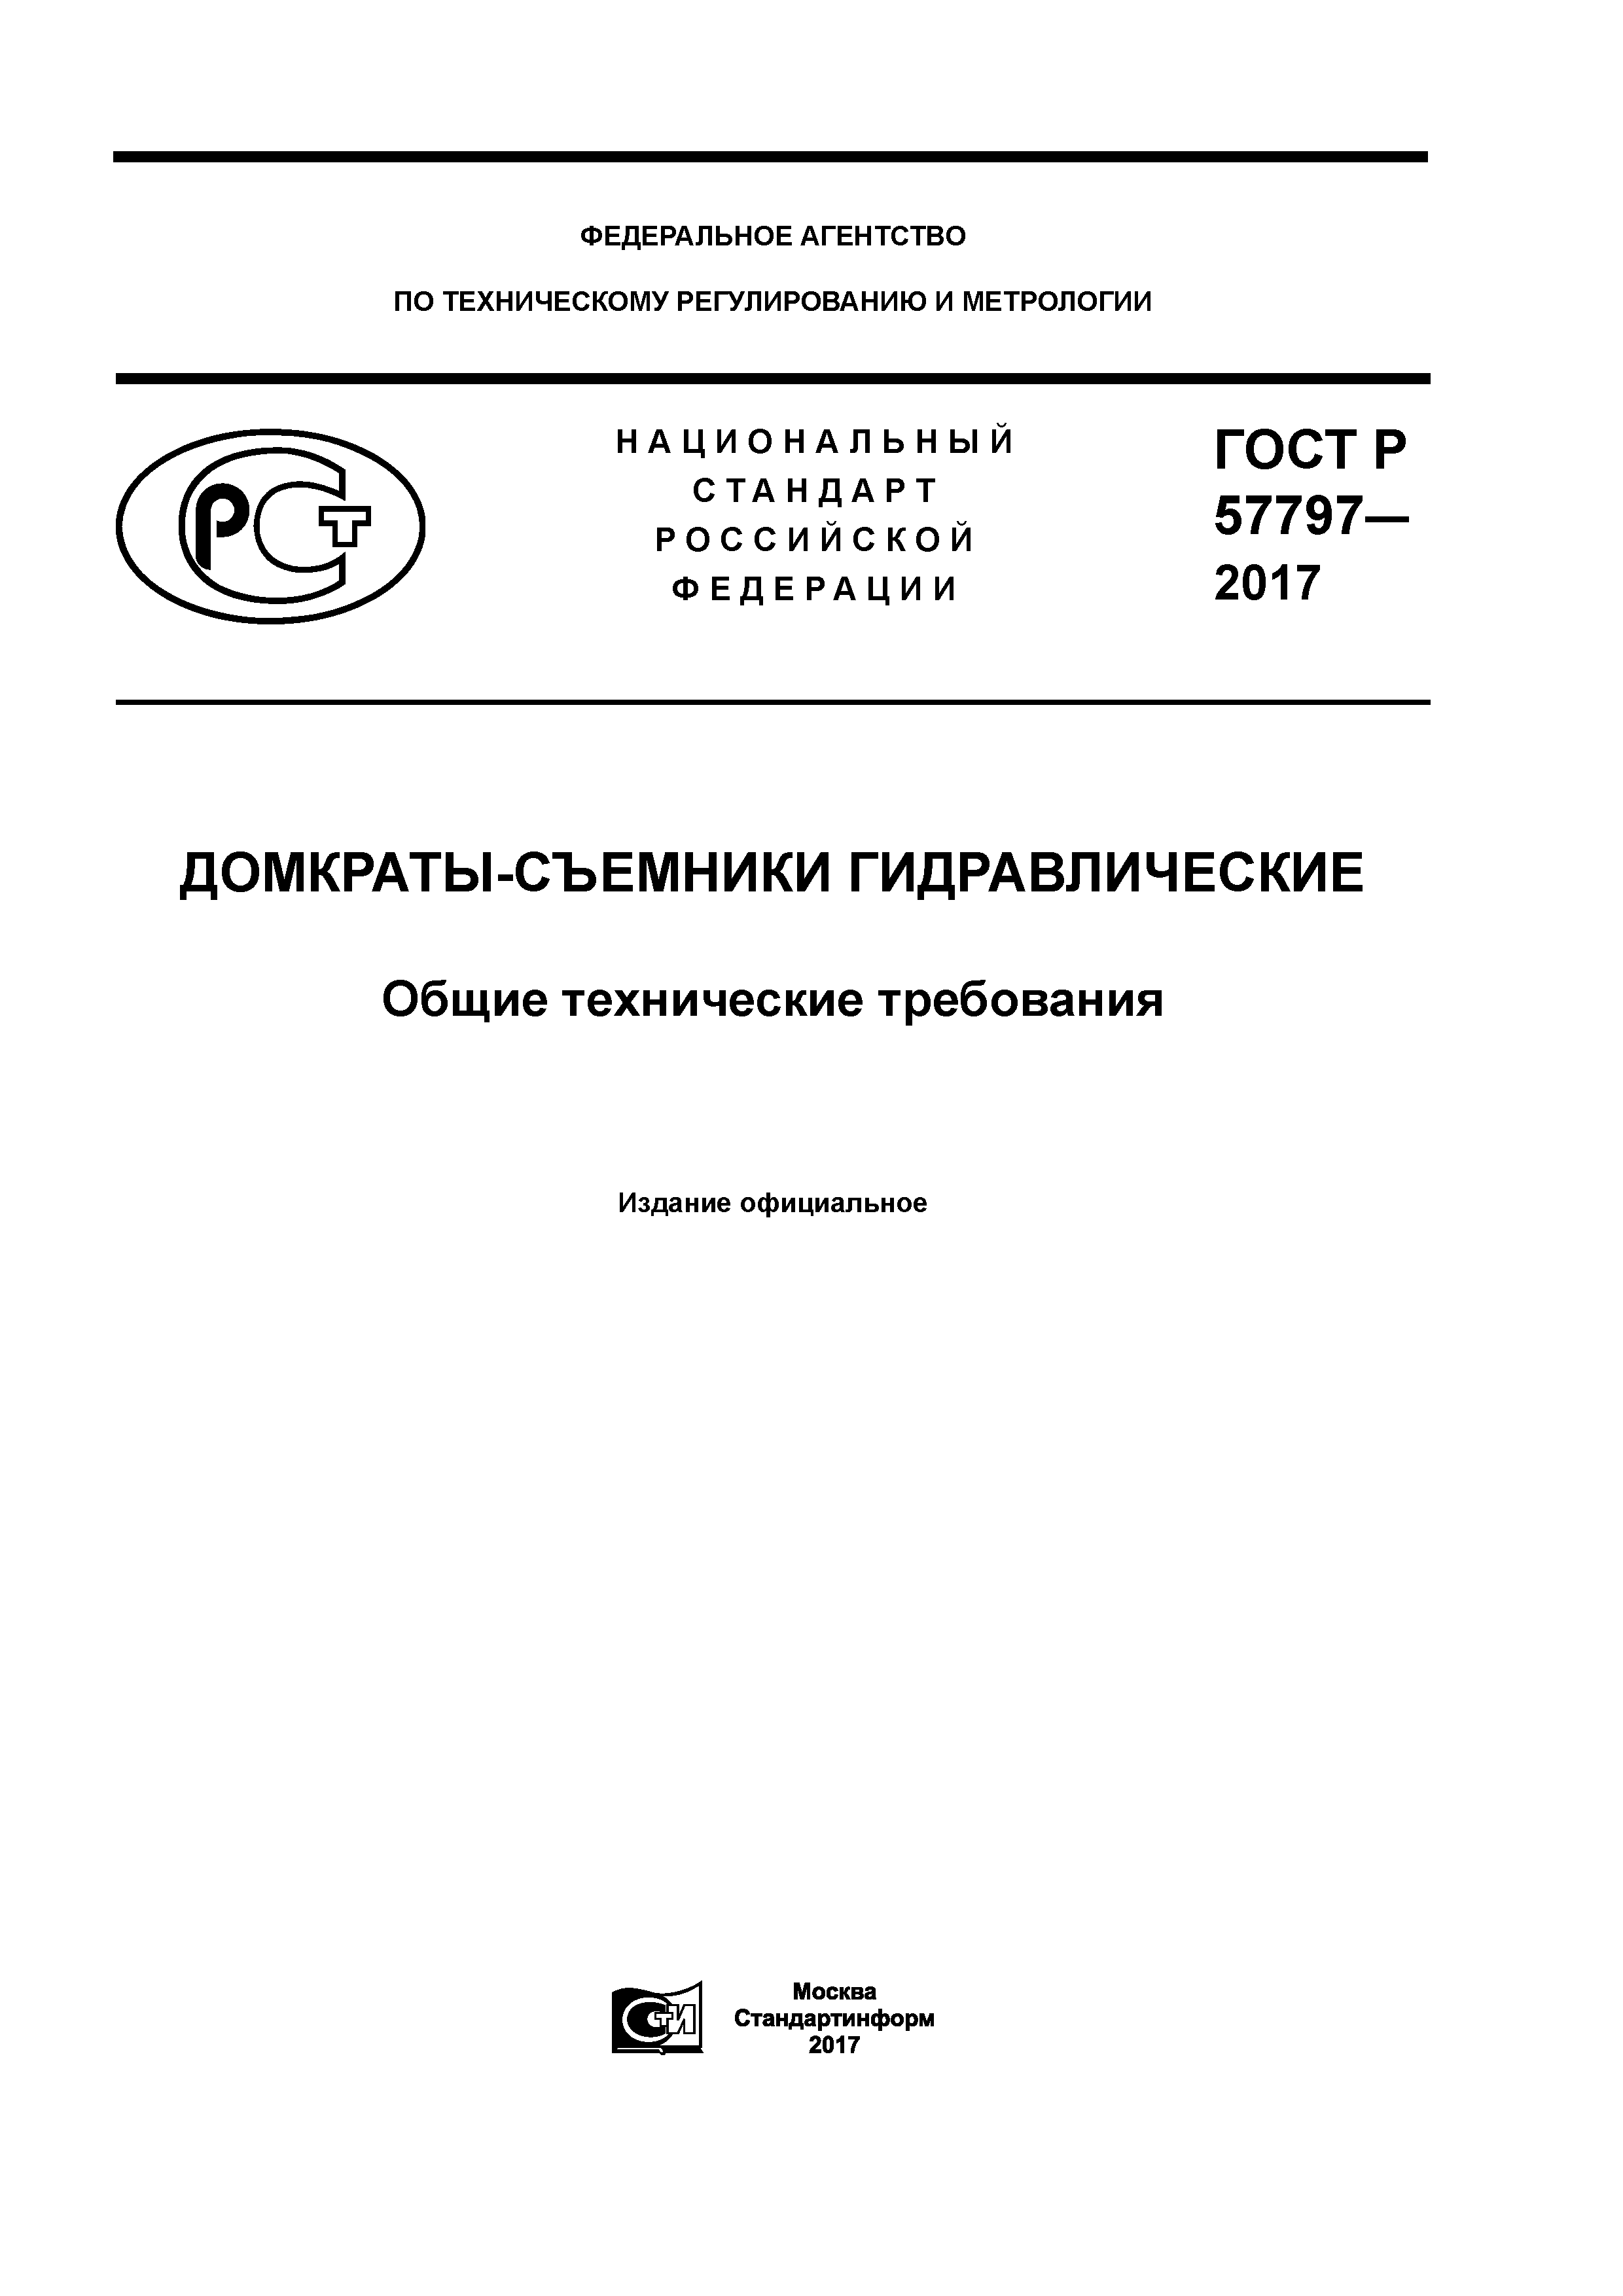 ГОСТ Р 57797-2017